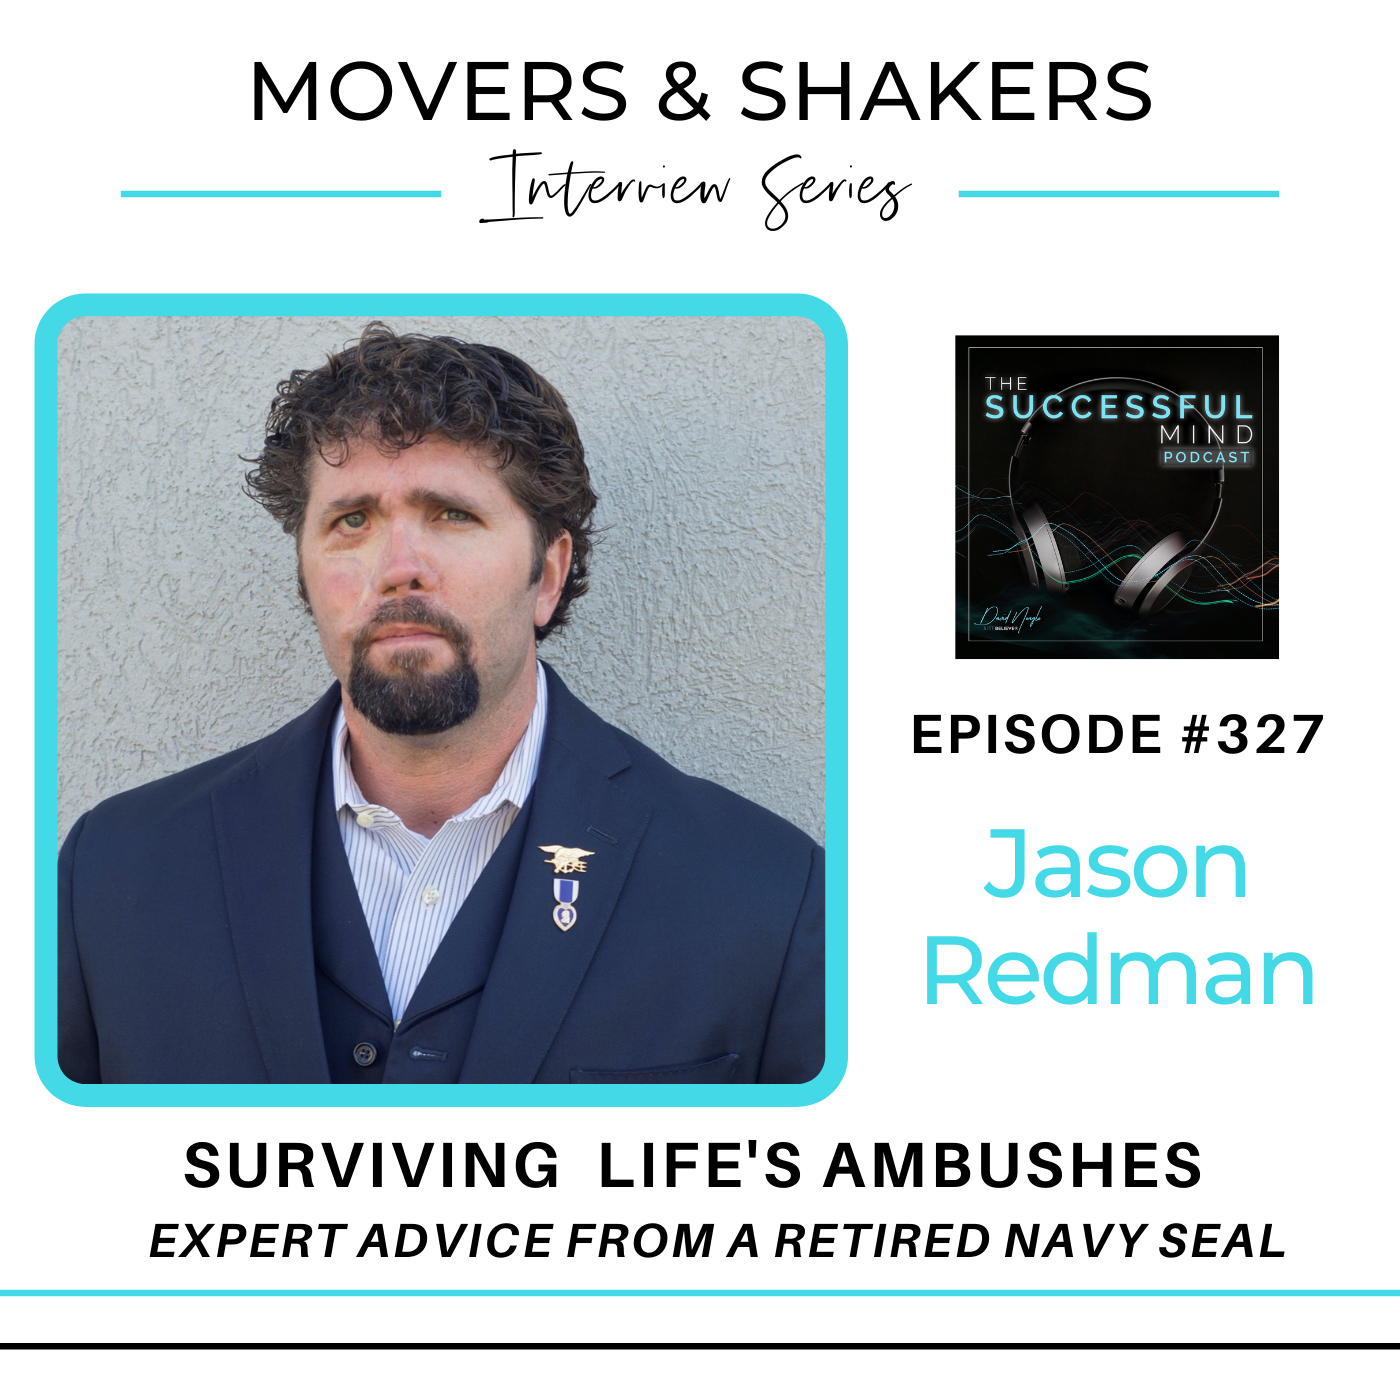 Movers & Shakers - Episode 327 - Jason Redman - Surviving Lifes’s Ambushes